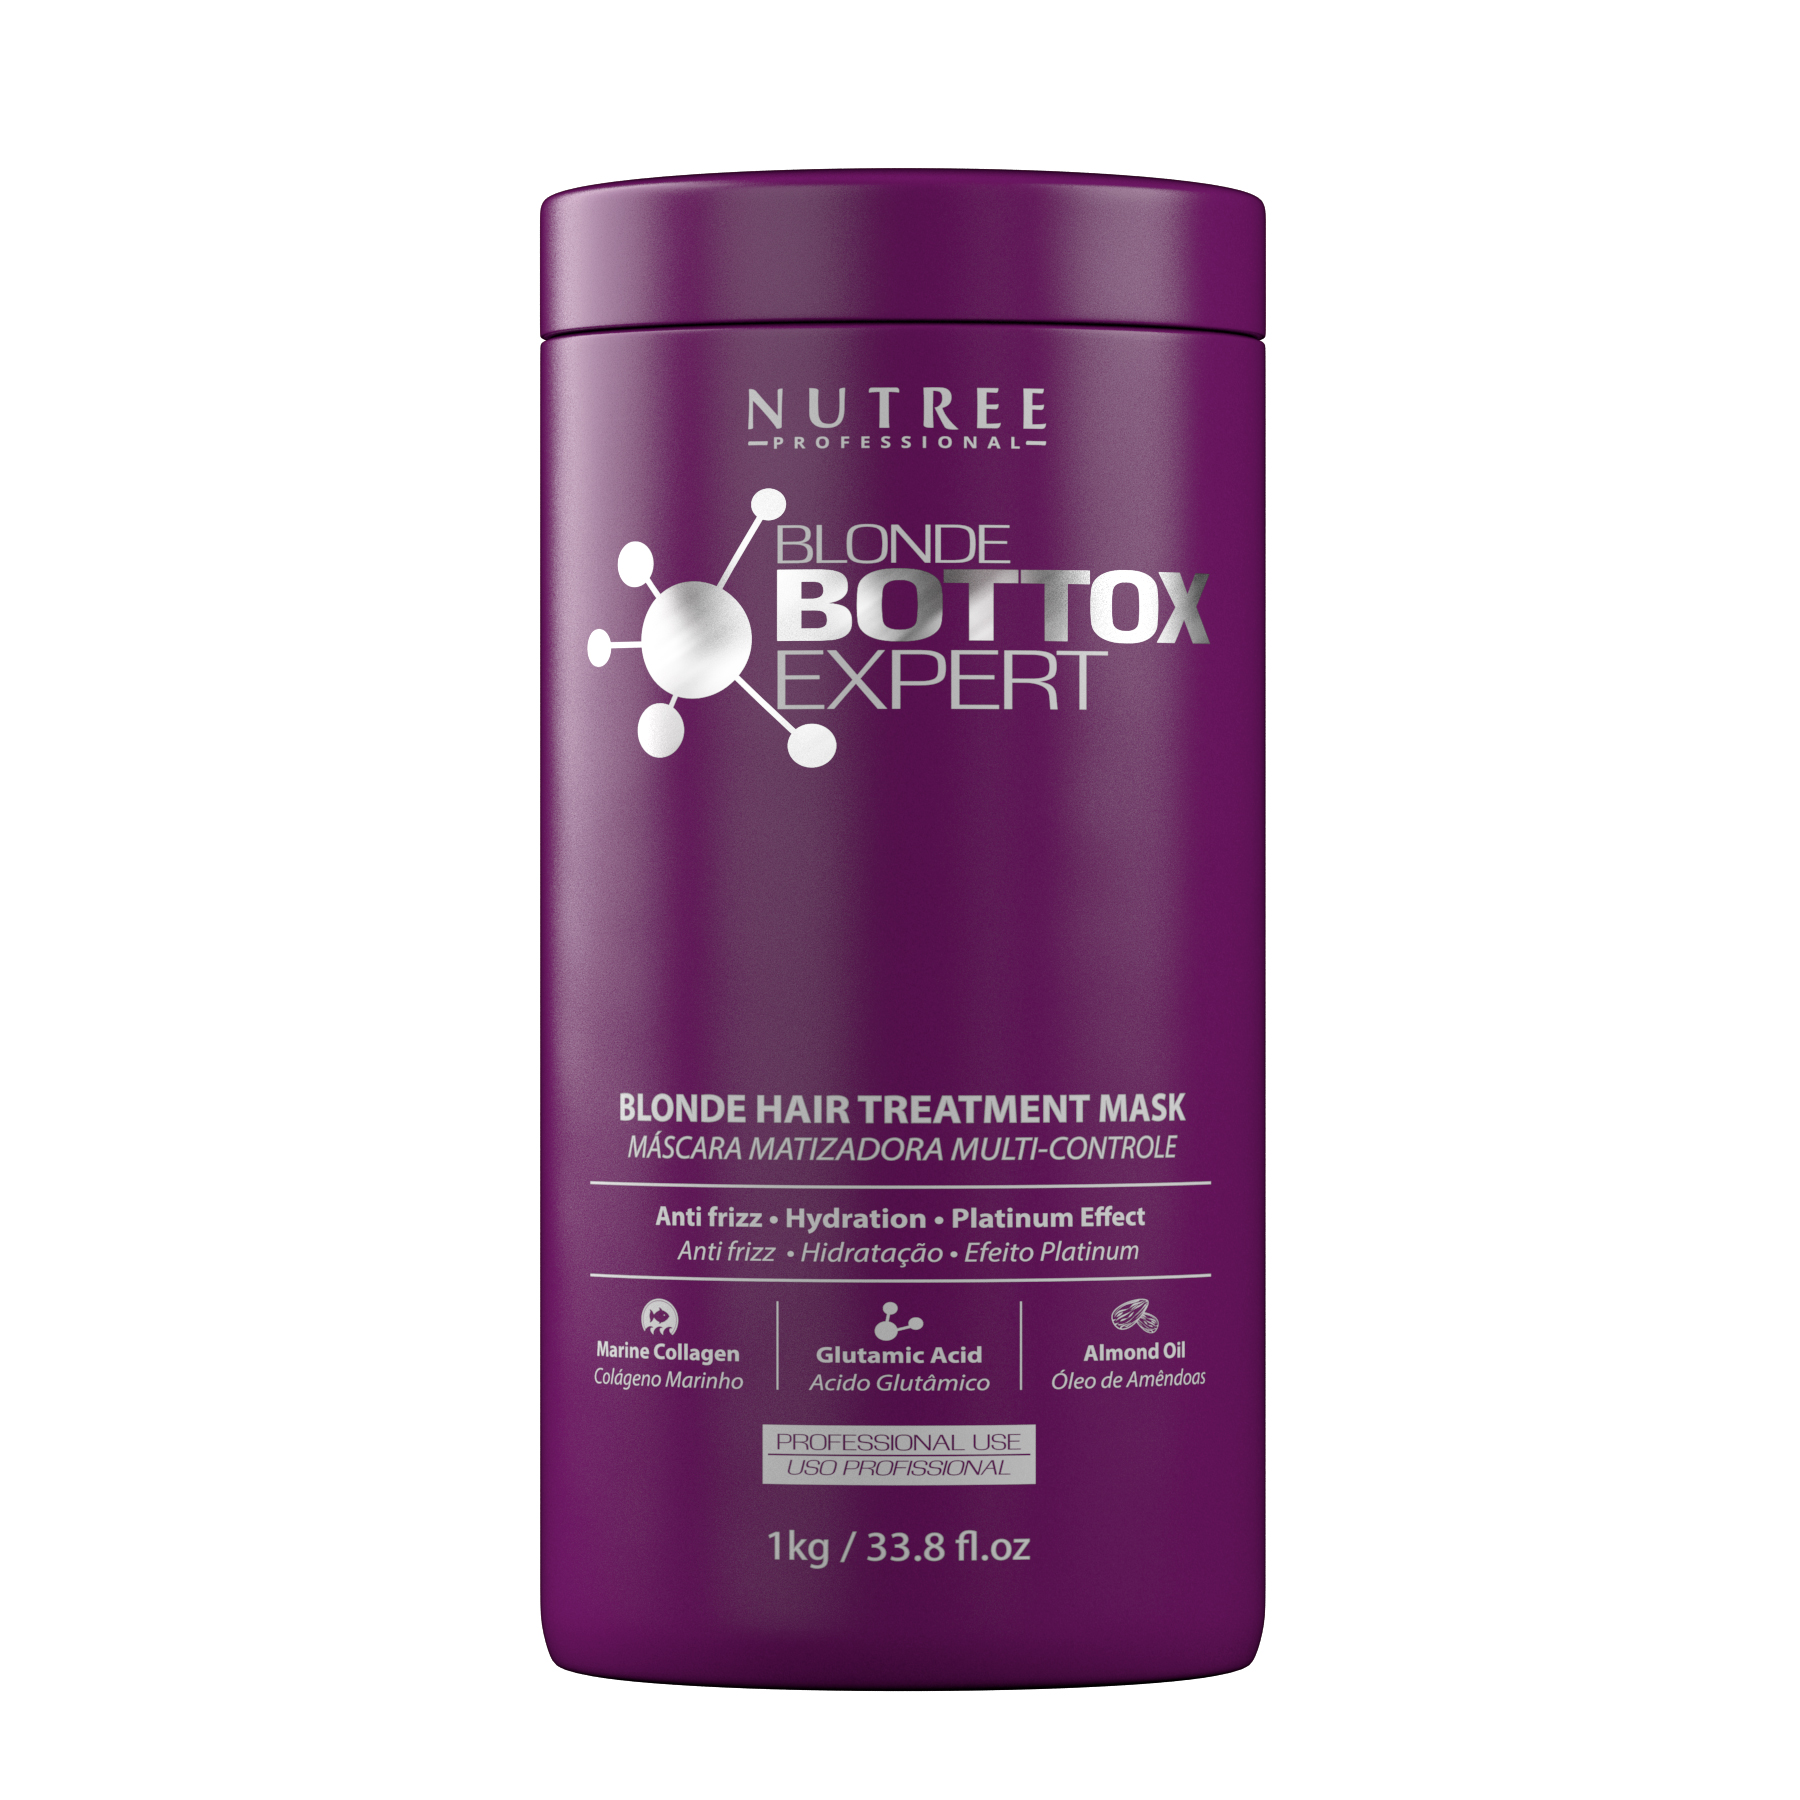 Nutree Blonde Bottox Expert - Ботокс для светлых волос, 1000 гр